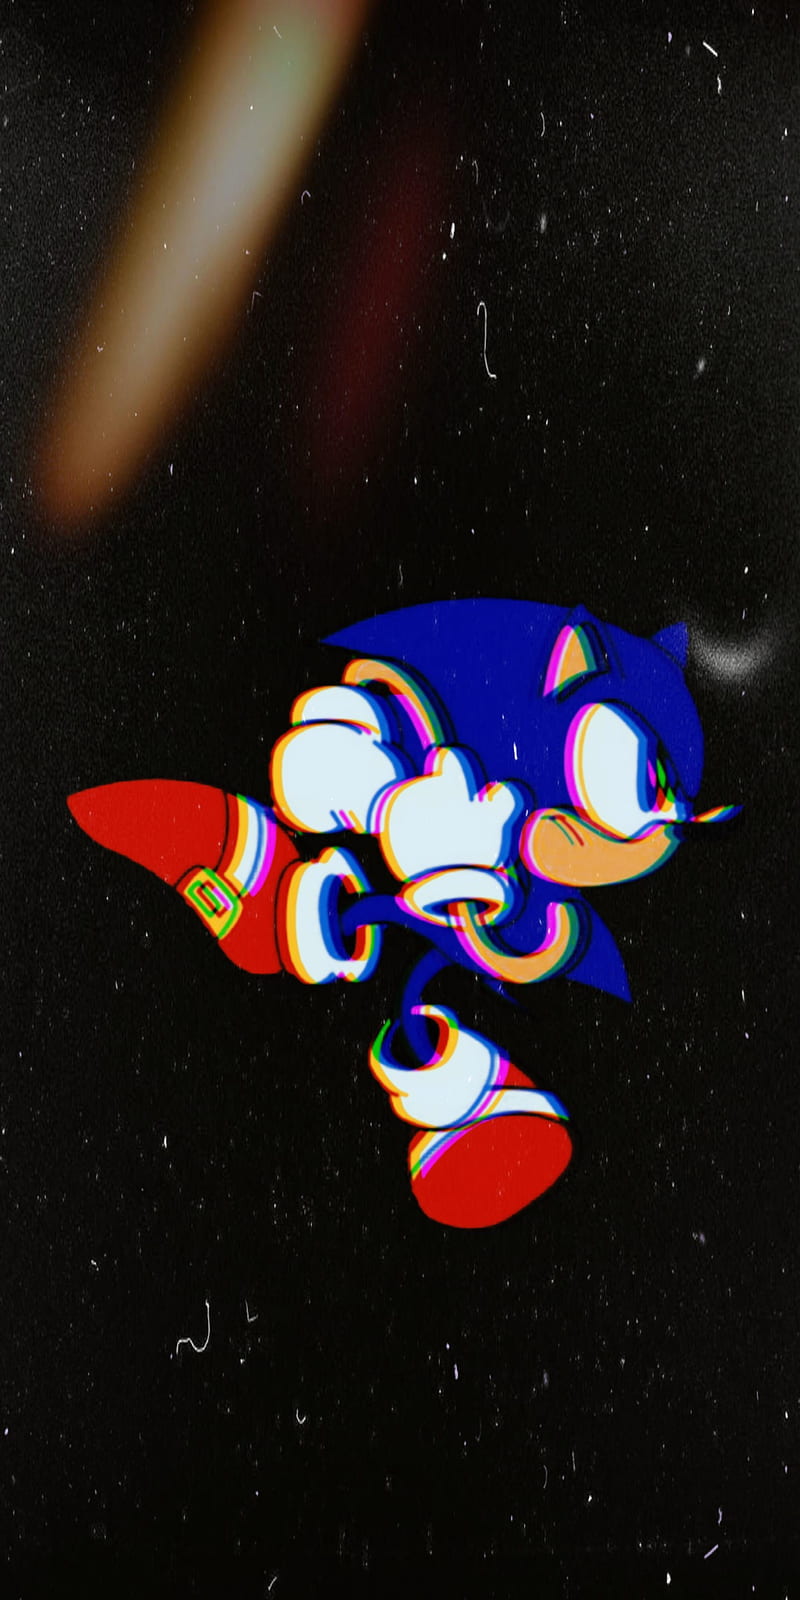 Darkspine Sonic - Sonic Retro